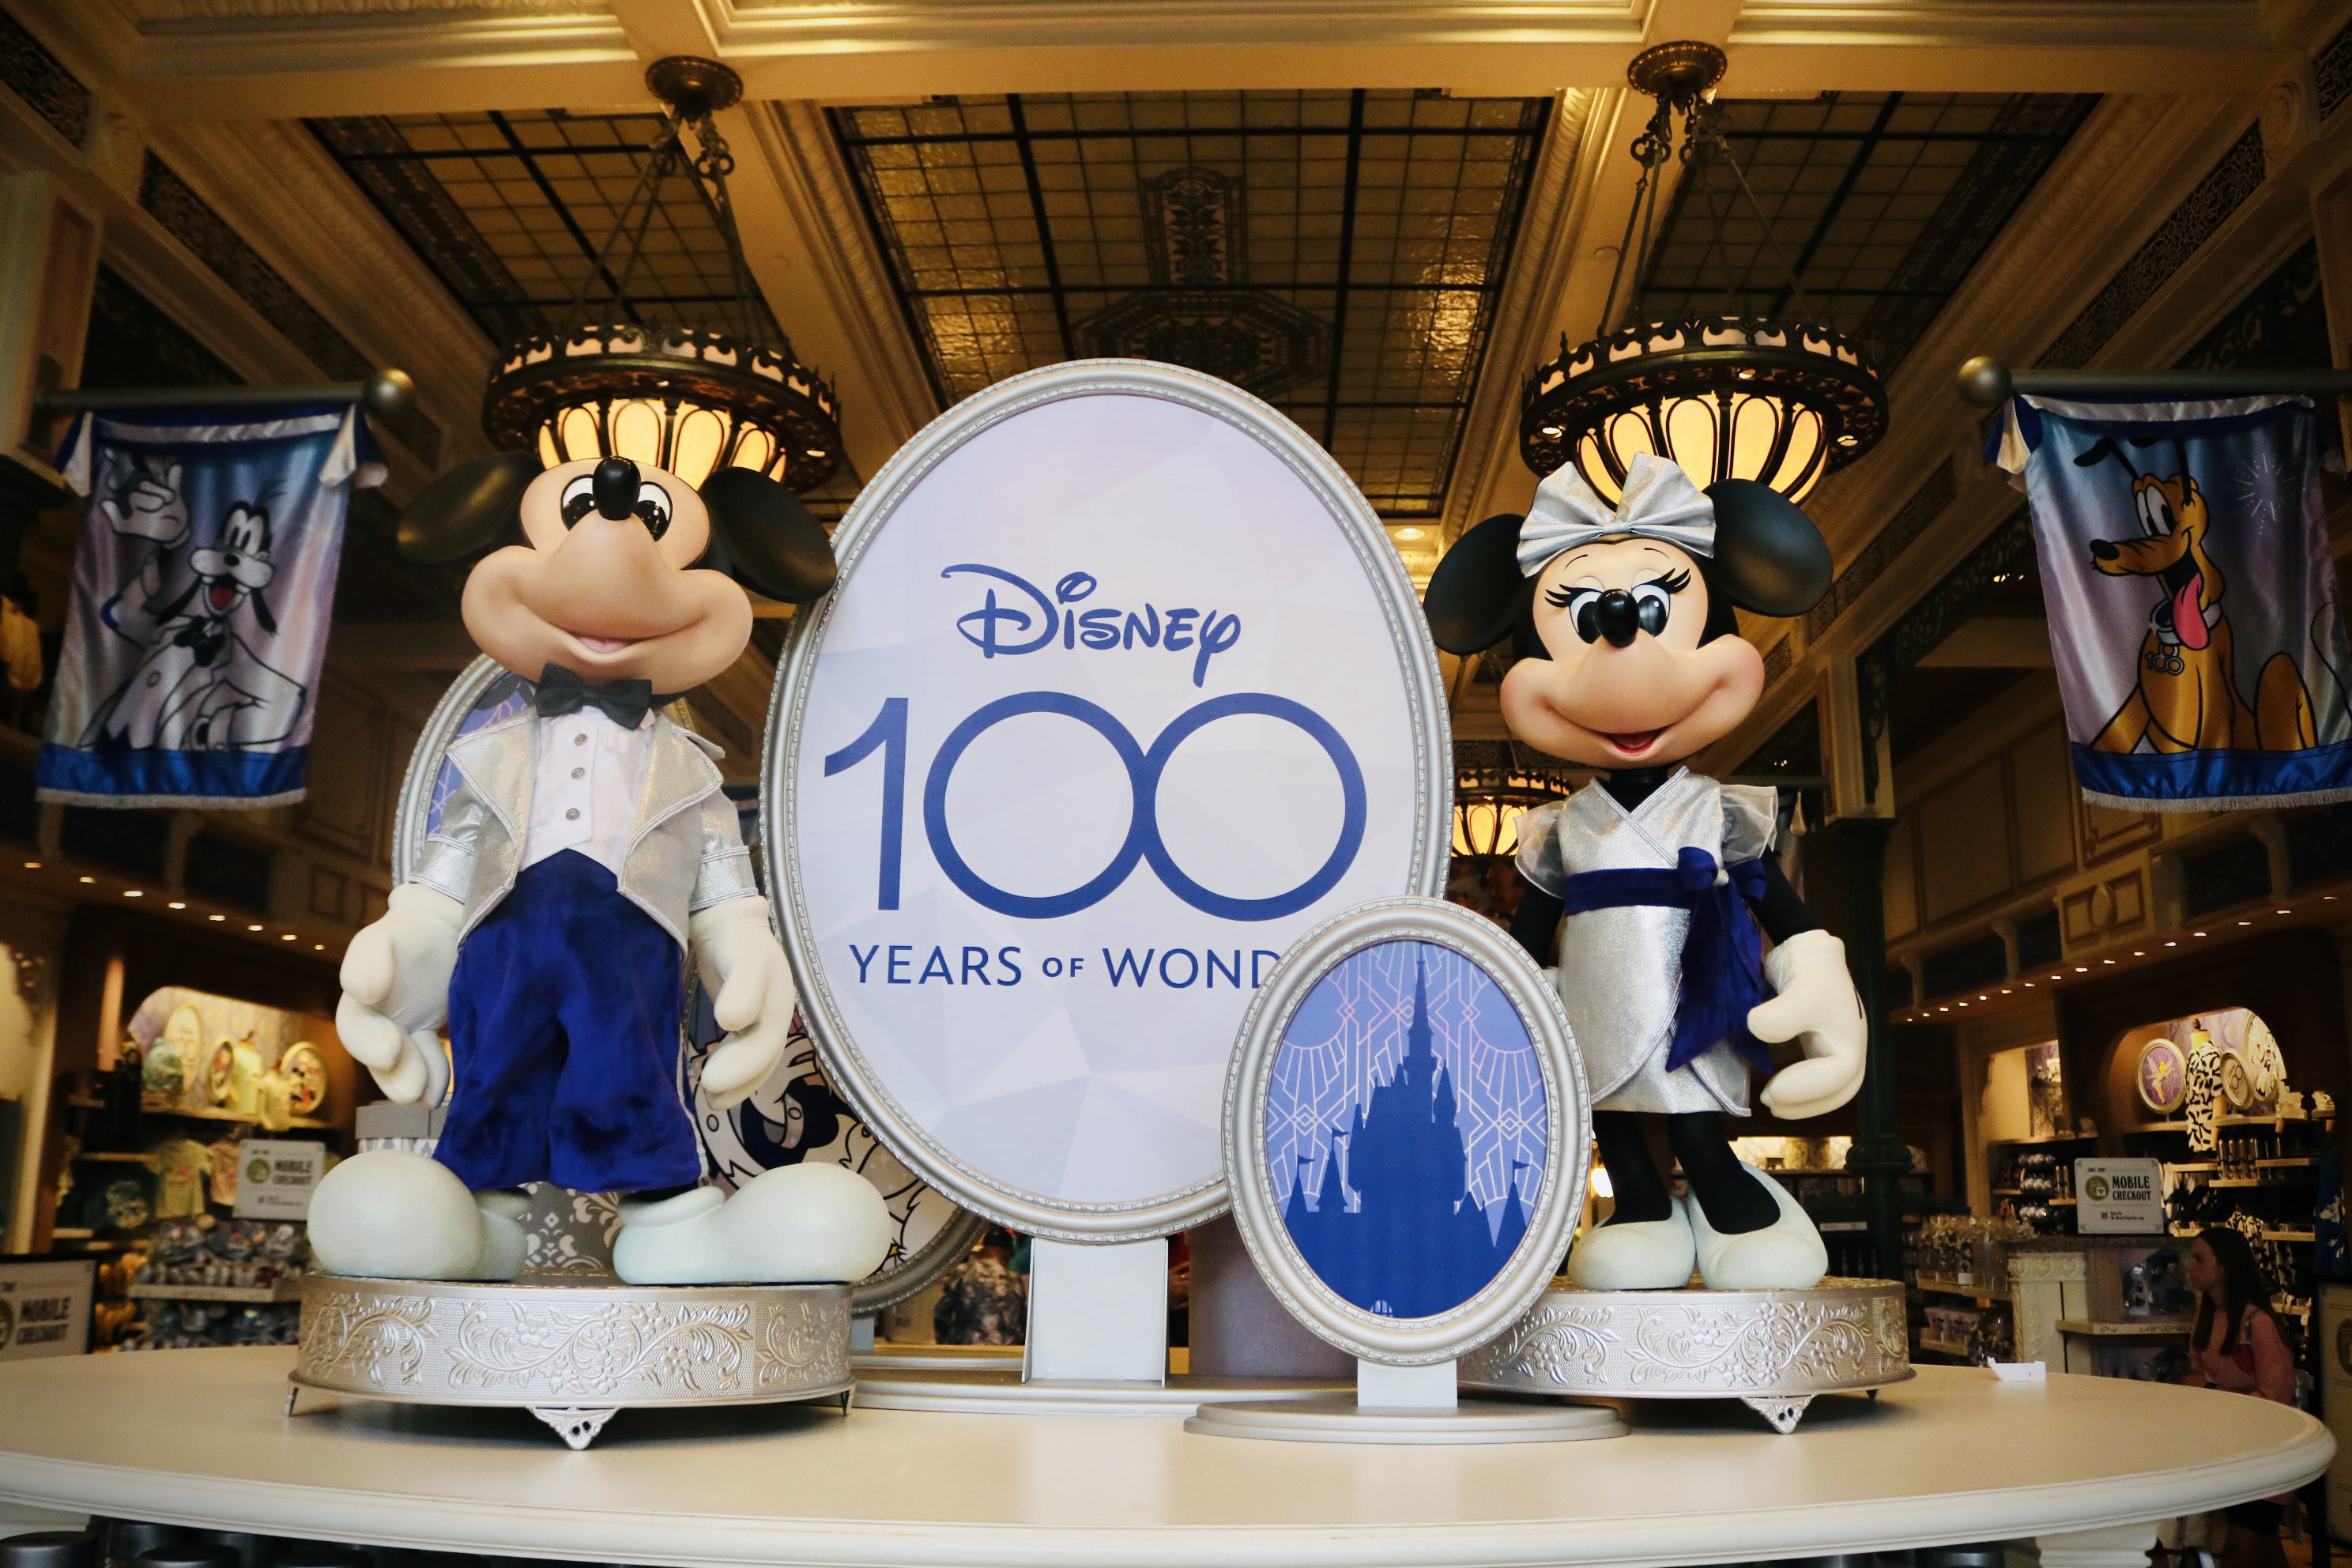 Disney+ Celebrates Disney100 With Today's Streaming Debut Of Walt